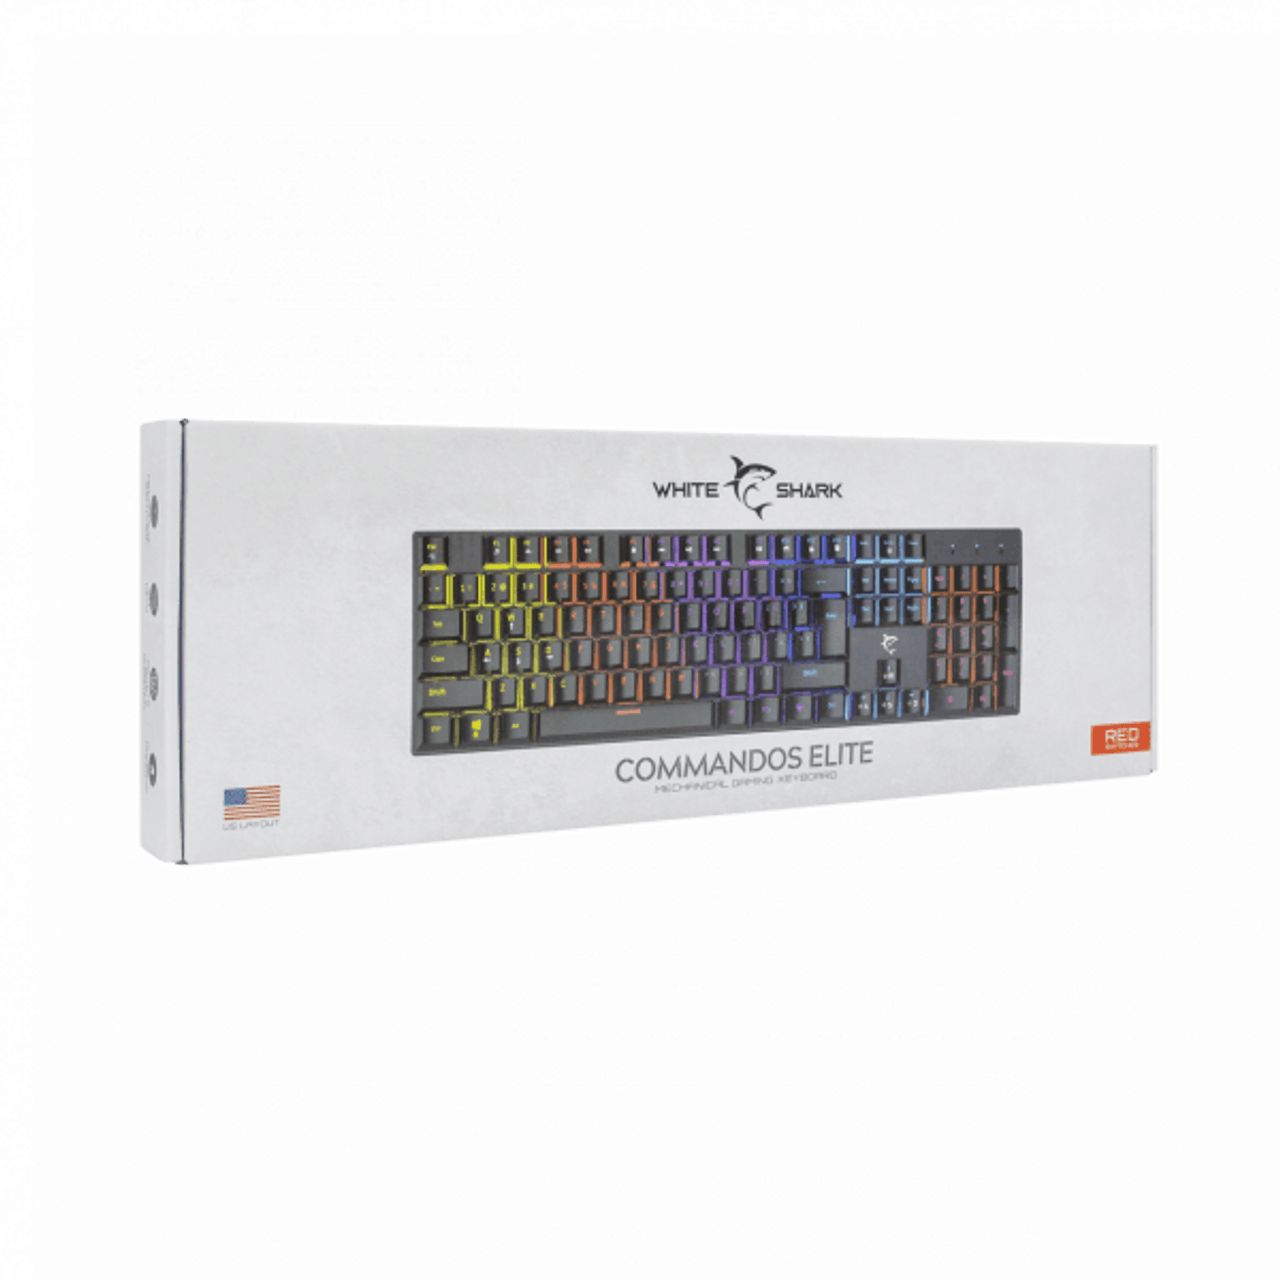 White Shark Keyboard GK-2107 COMMANDOS ELITE - Mehanicka / US - RED SW